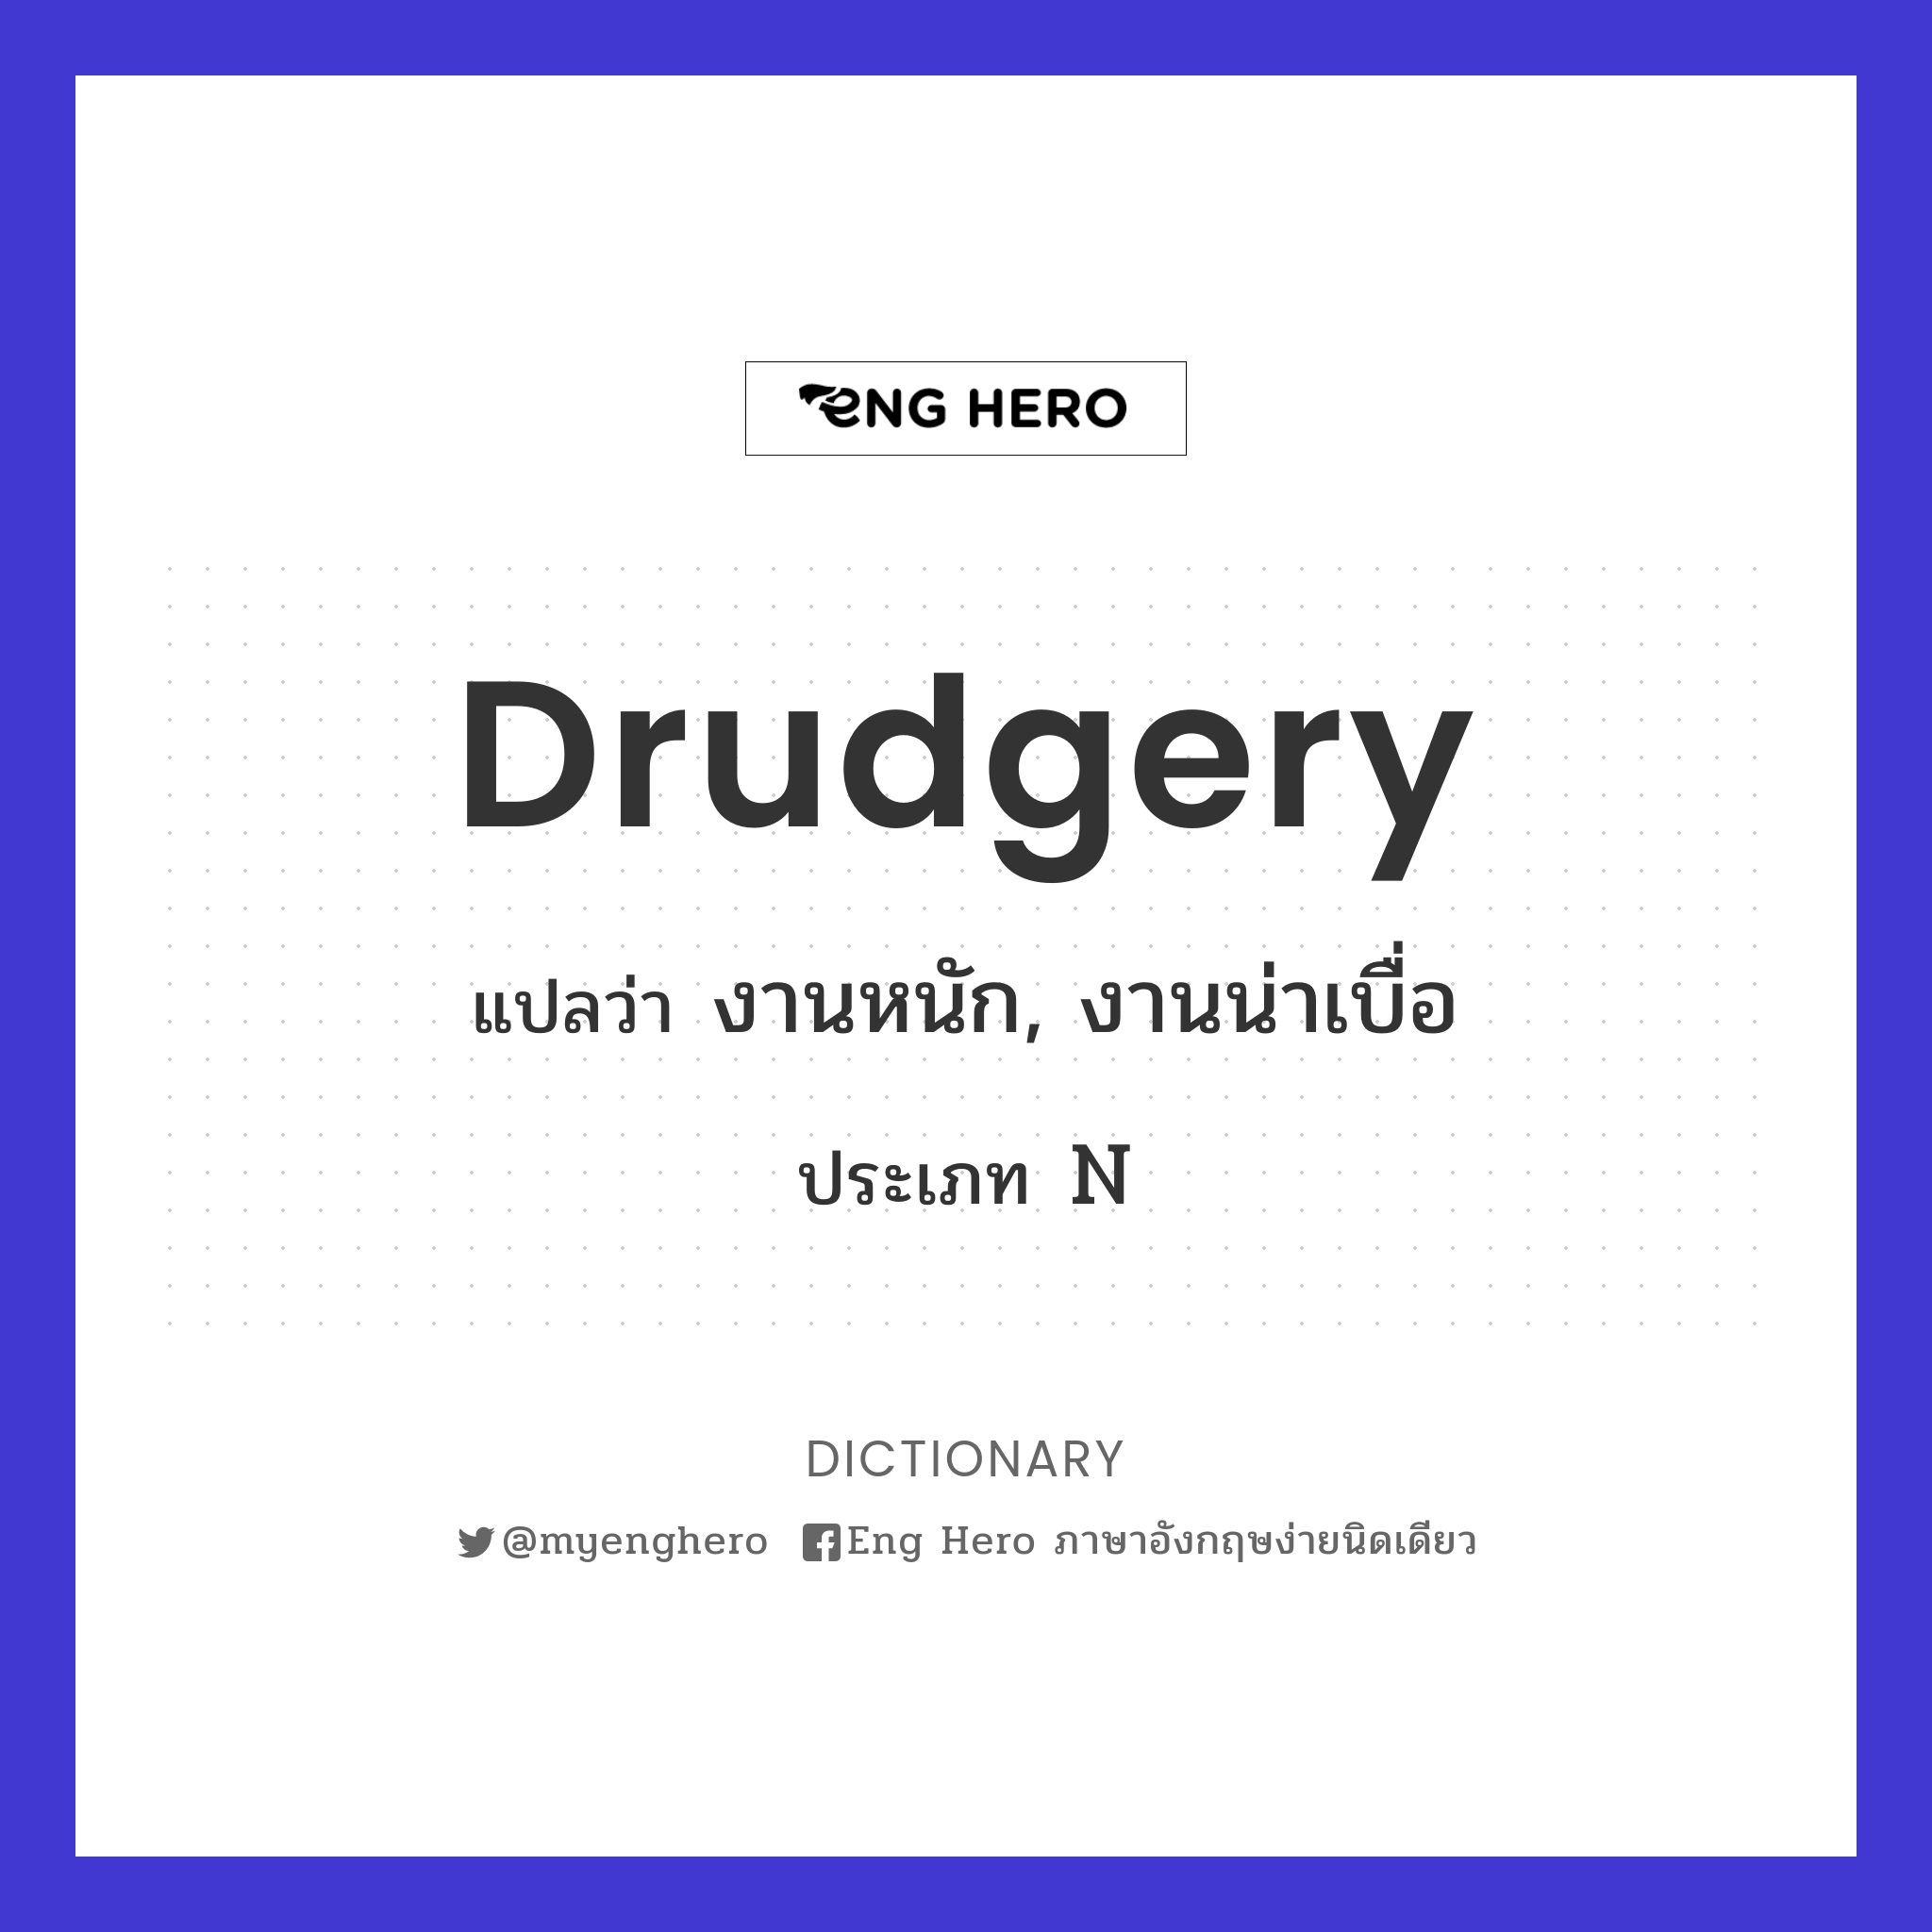 drudgery